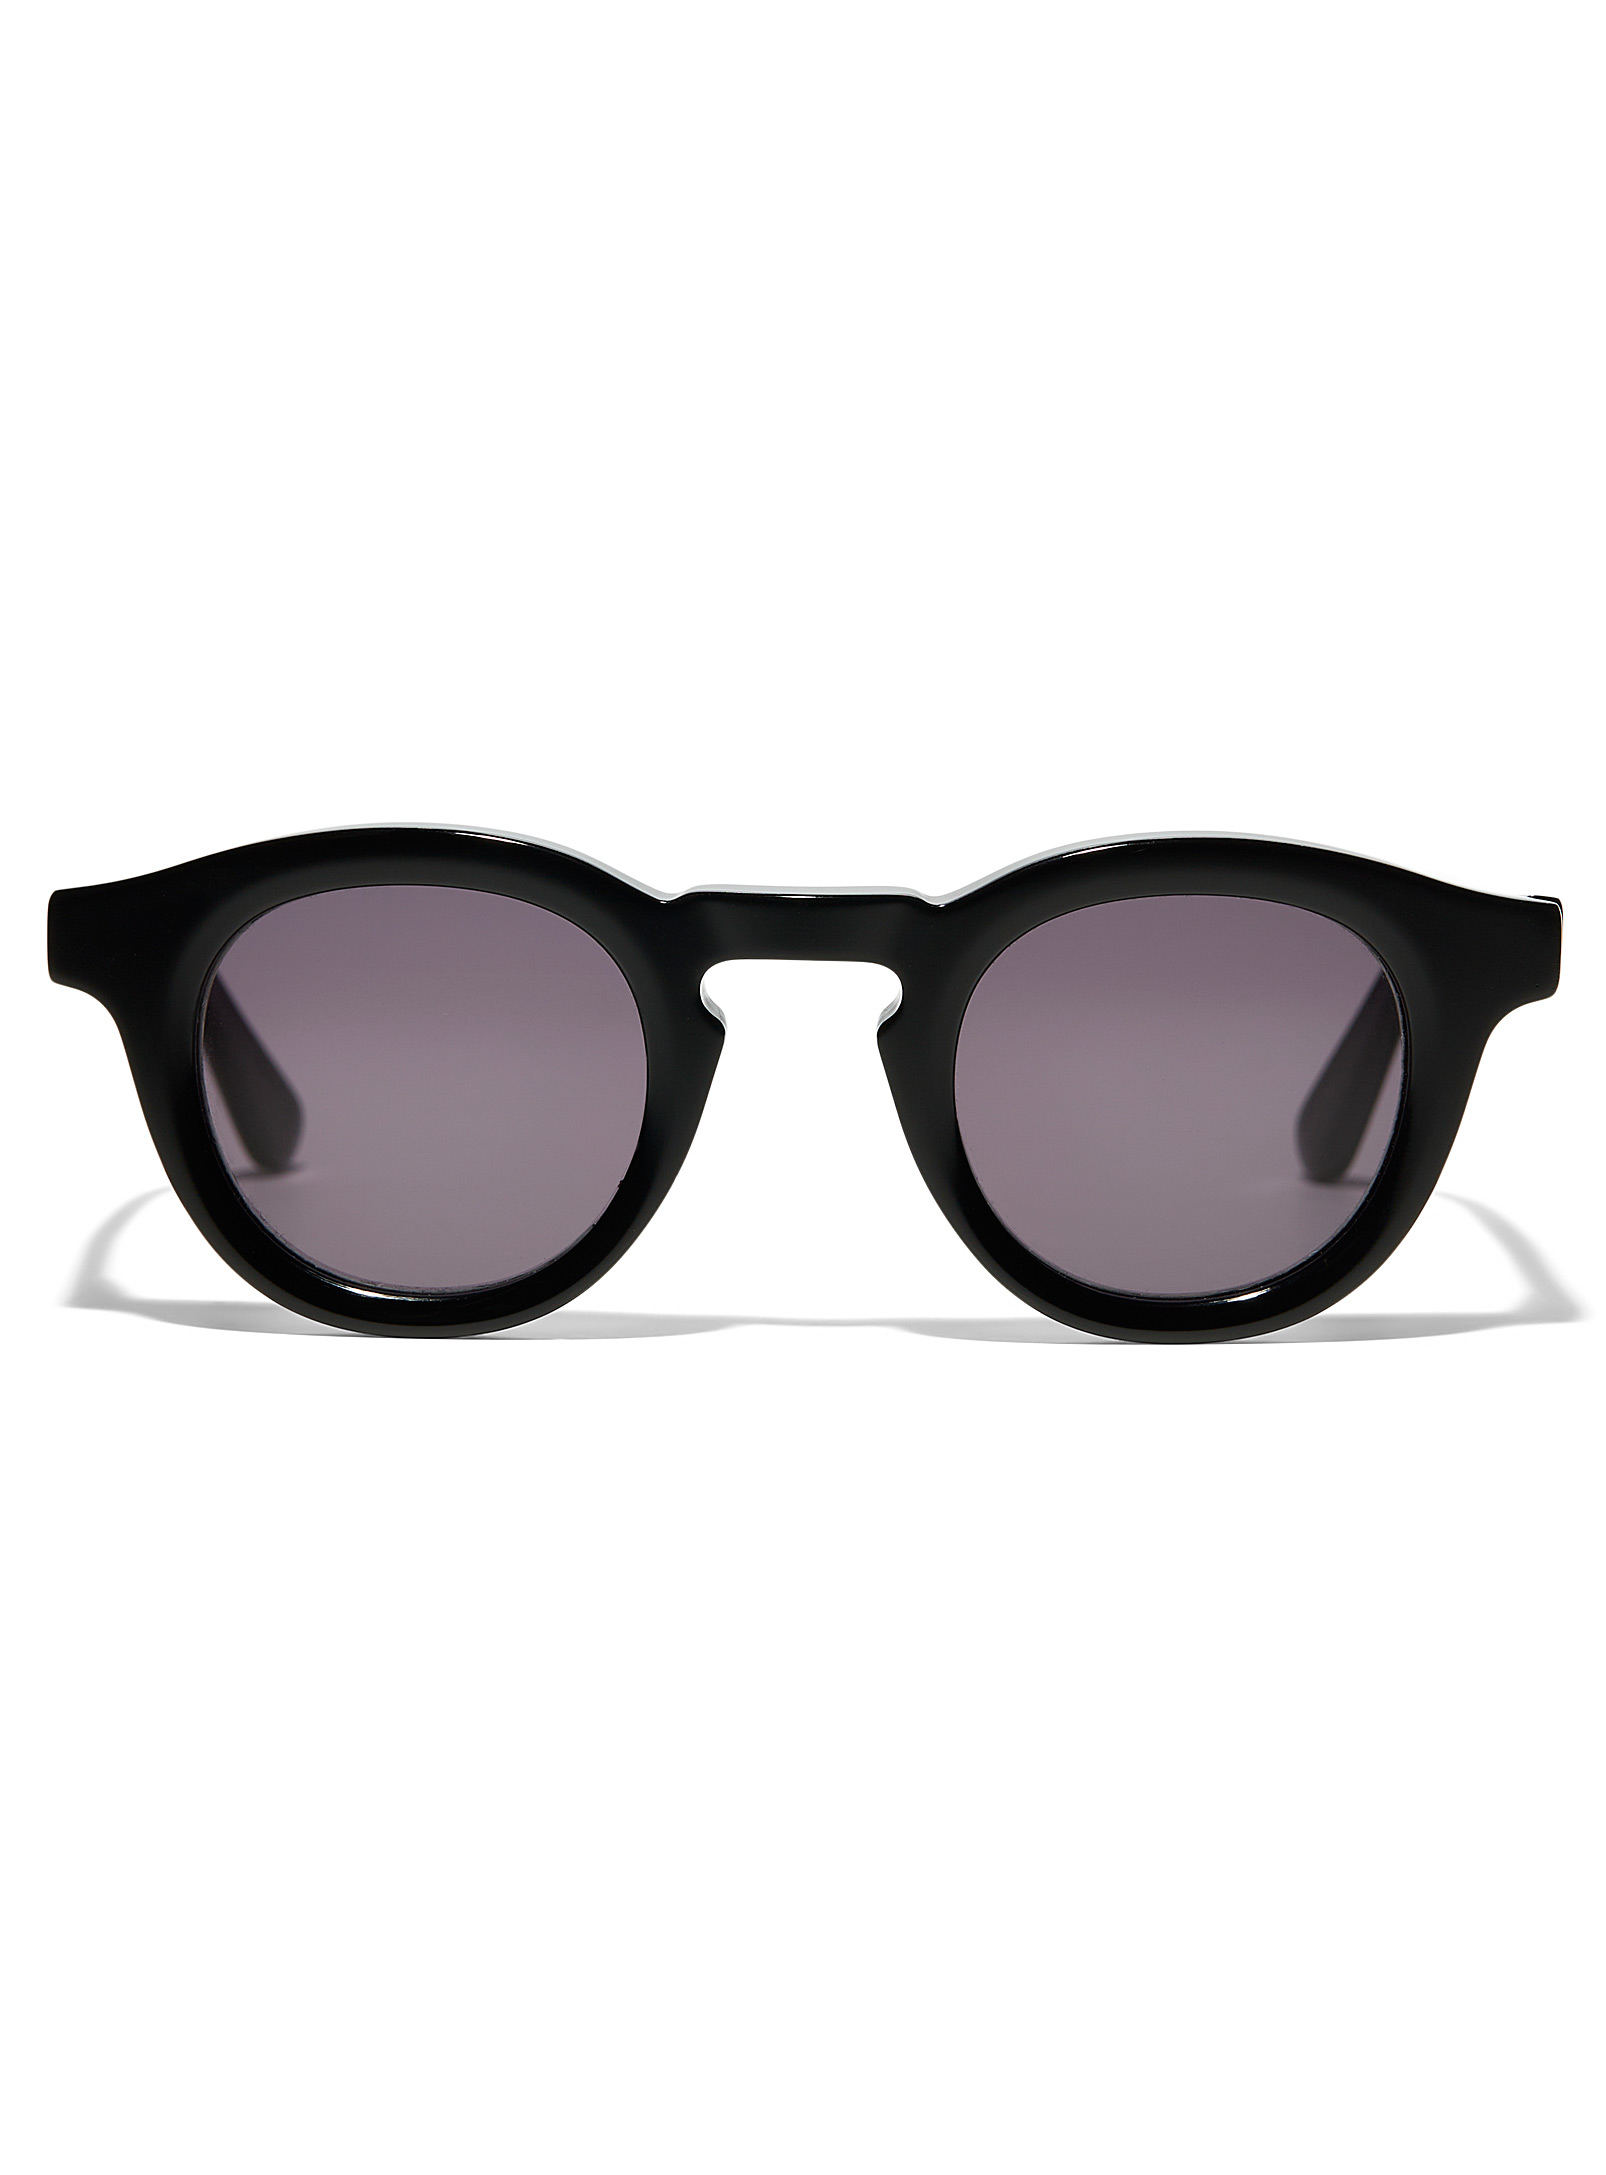 French Kiwis Jude Round Sunglasses In Black